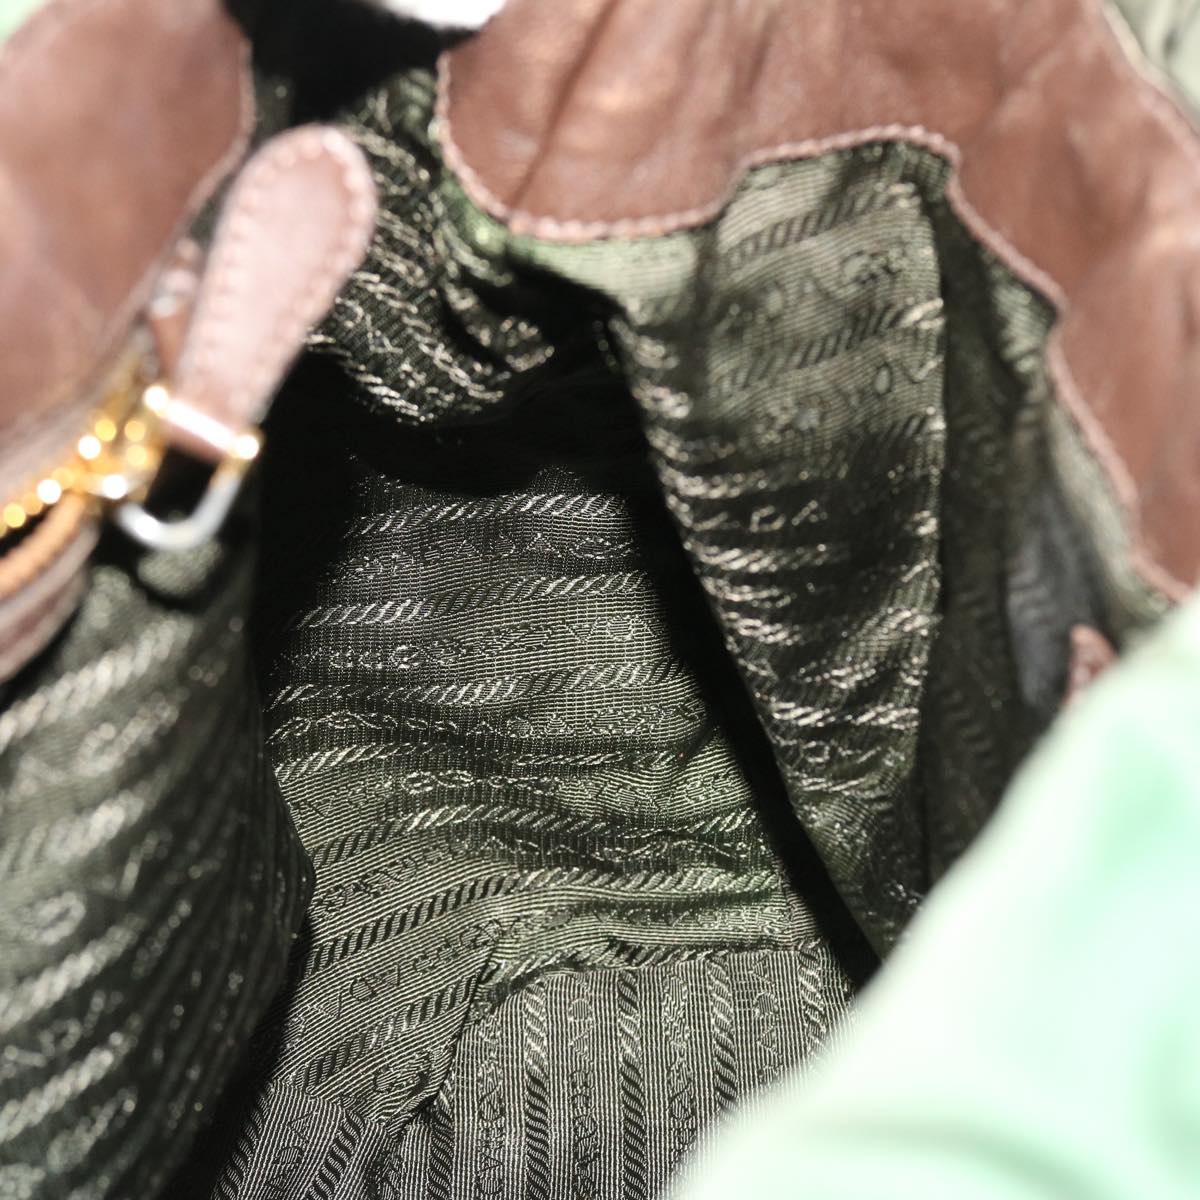 PRADA Shoulder Bag Nylon Green Auth 50780